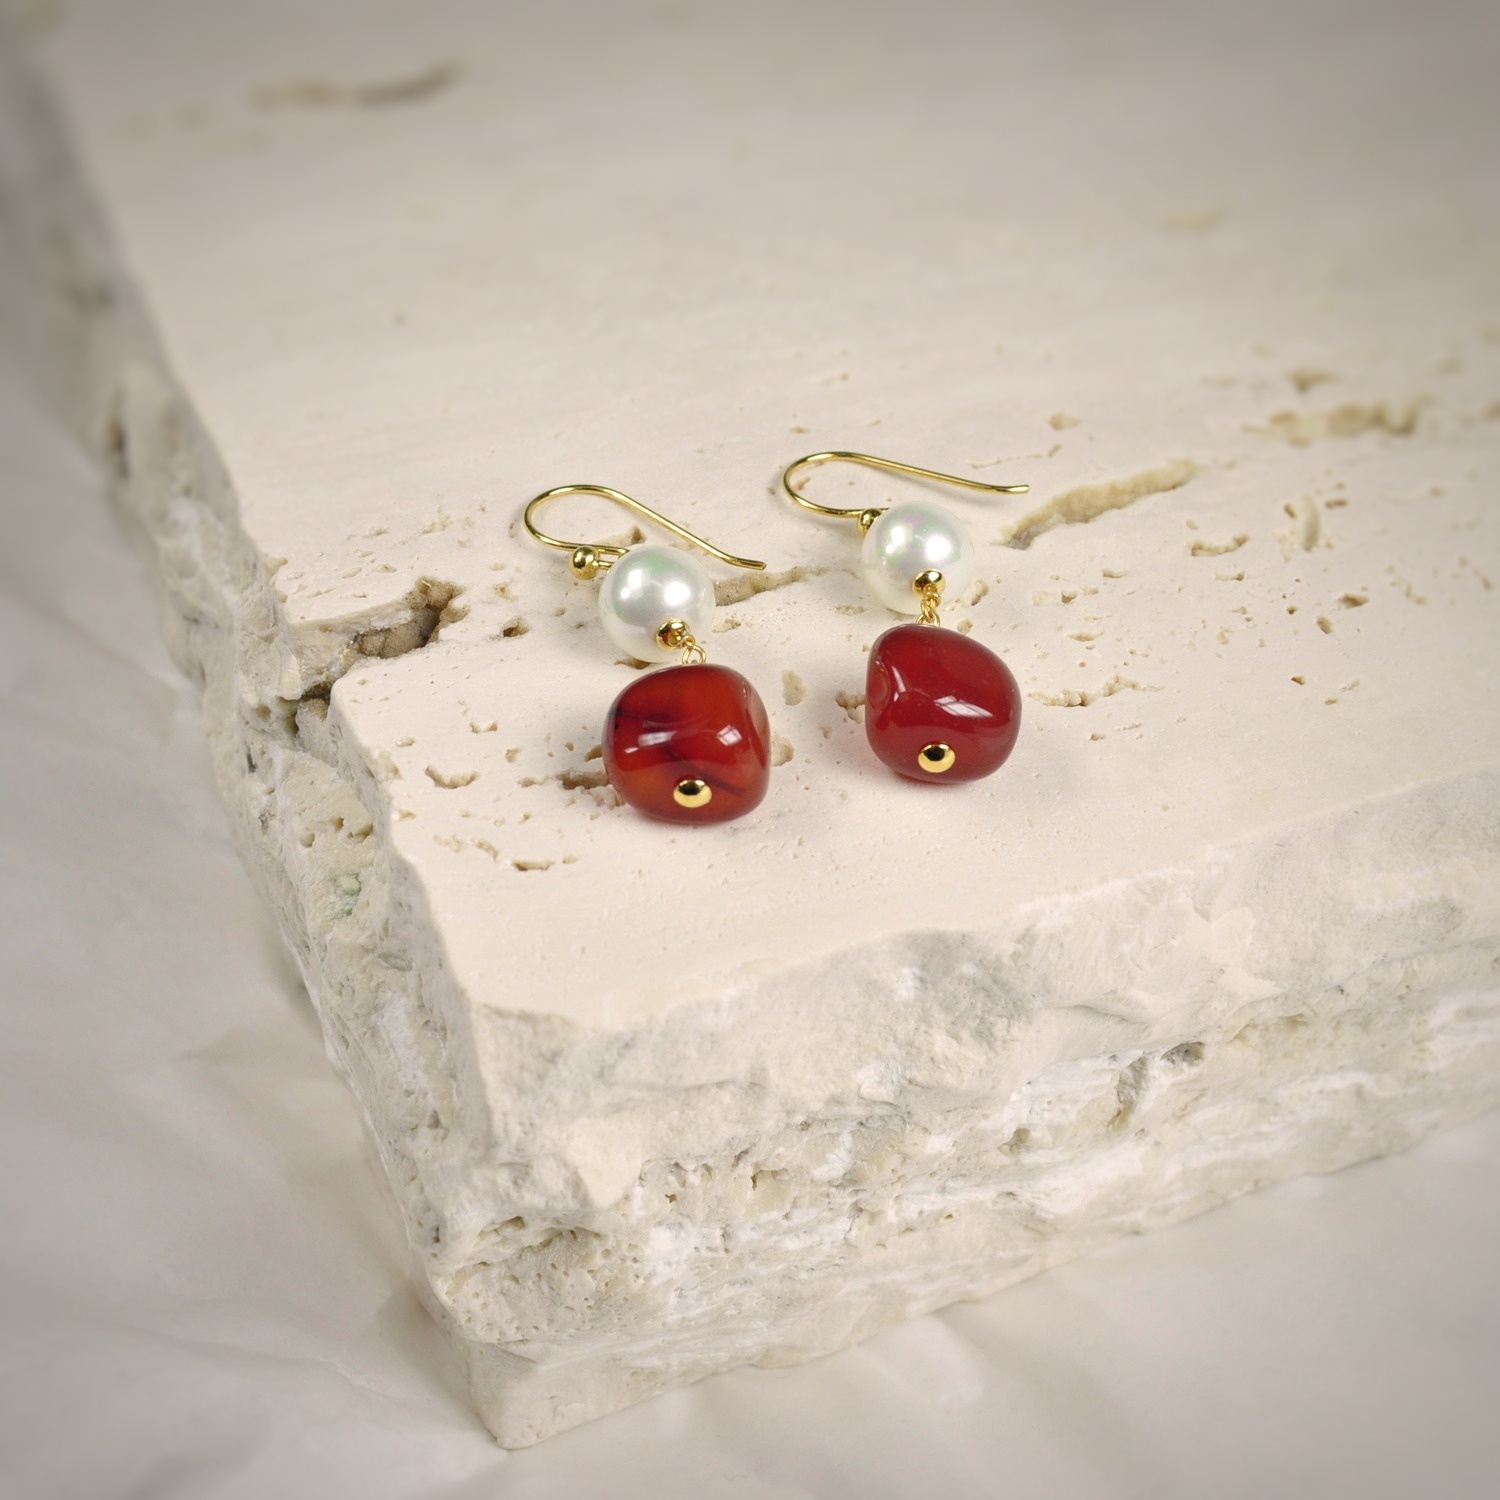 Pearls earrings with carnelian stones 1